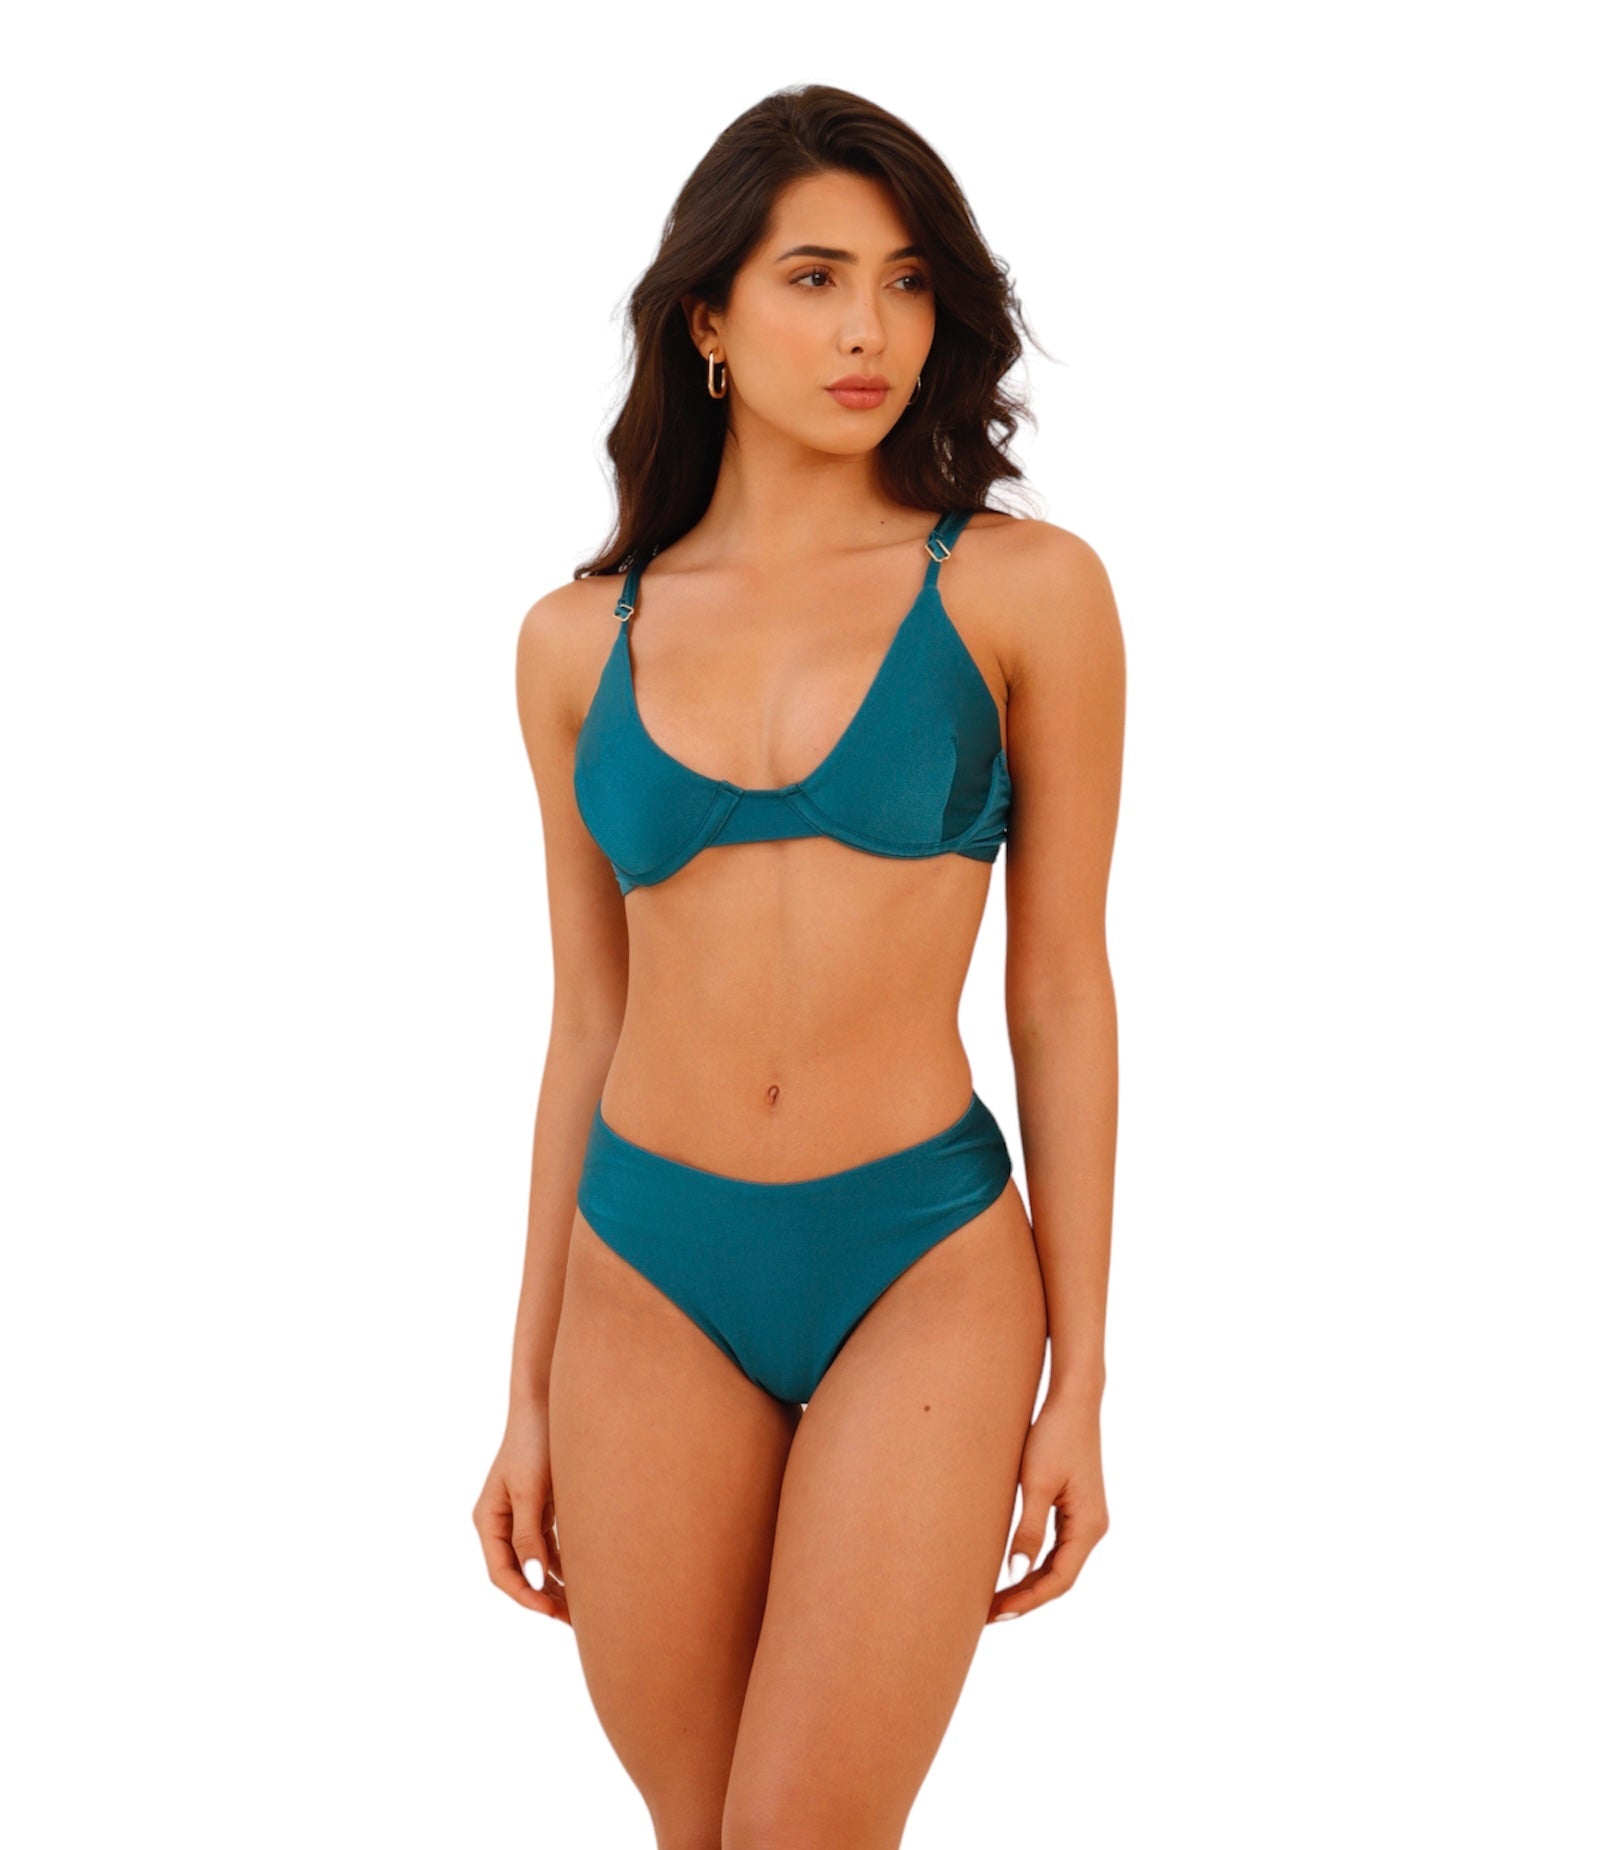 Capri Bikini Set - Underwire Top - Scrunch Bottom - Teal Blue - Bikini Set Swimsuit - Adara Swimwear - Small--Adara Swimwear